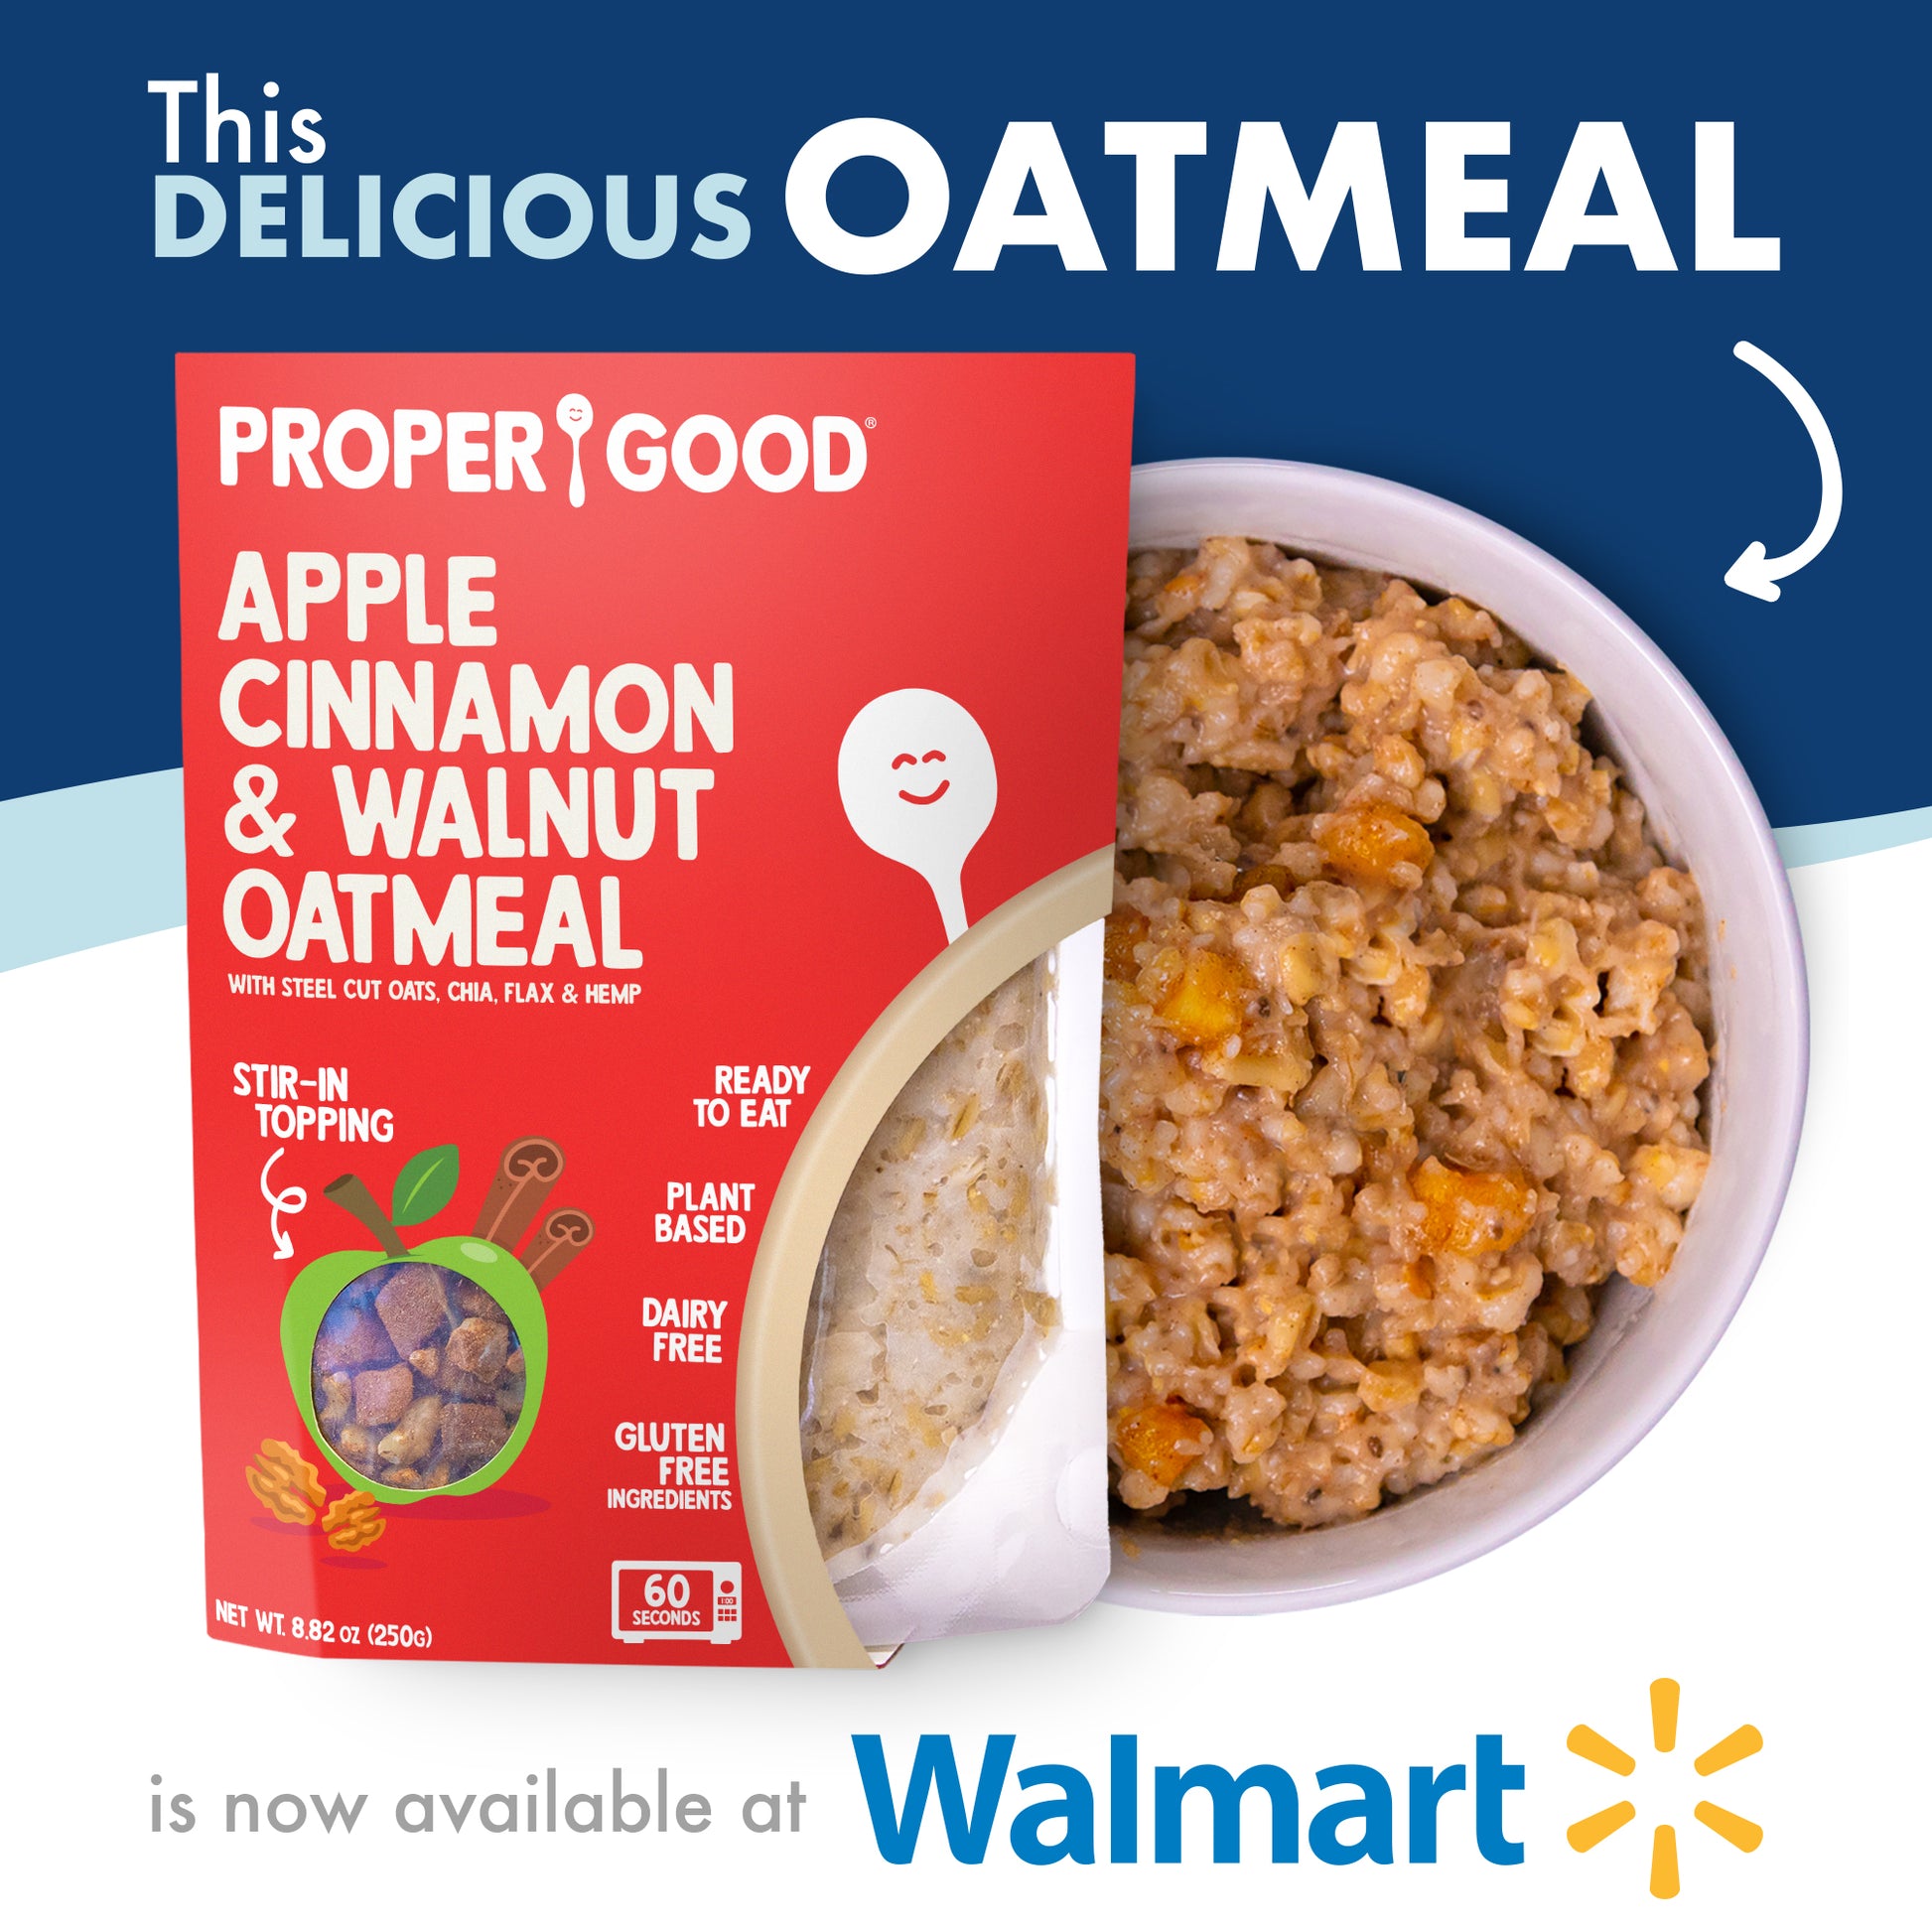 Apple Cinnamon & Walnut Oatmeal available in Walmart - Eat Proper Good